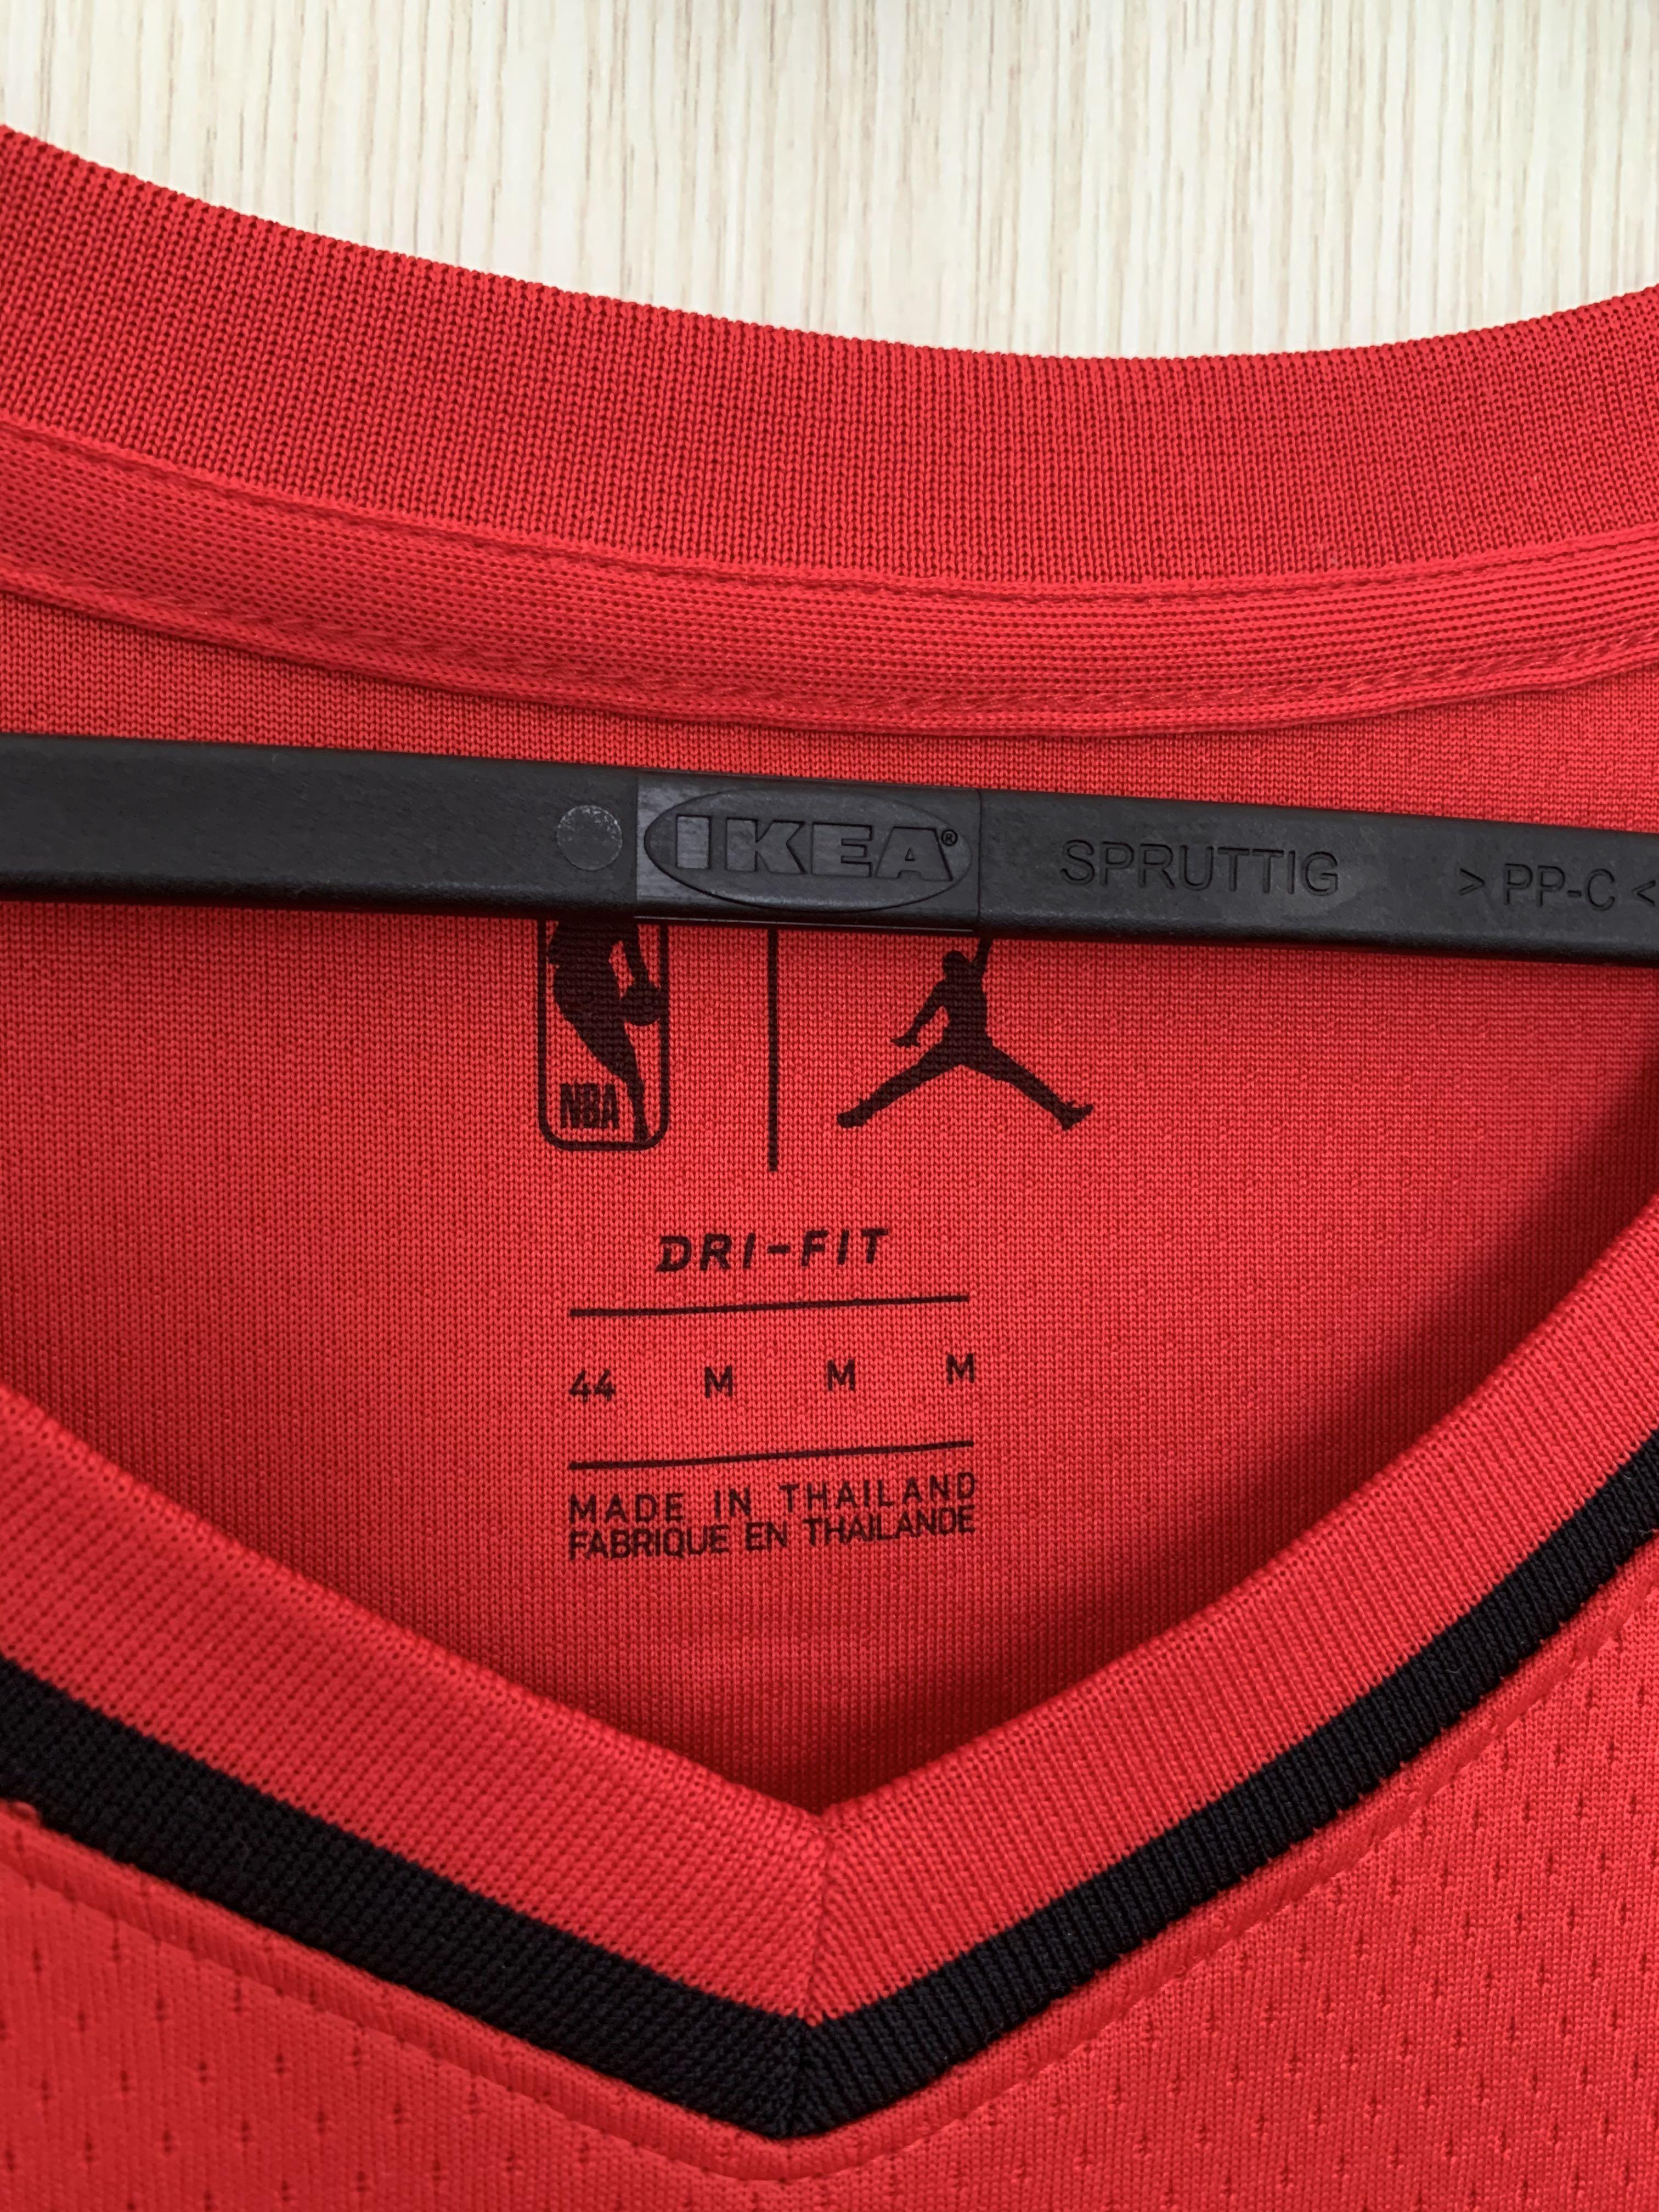 Carmelo Anthony Trail Blazers Icon Edition Nike NBA Swingman Jersey